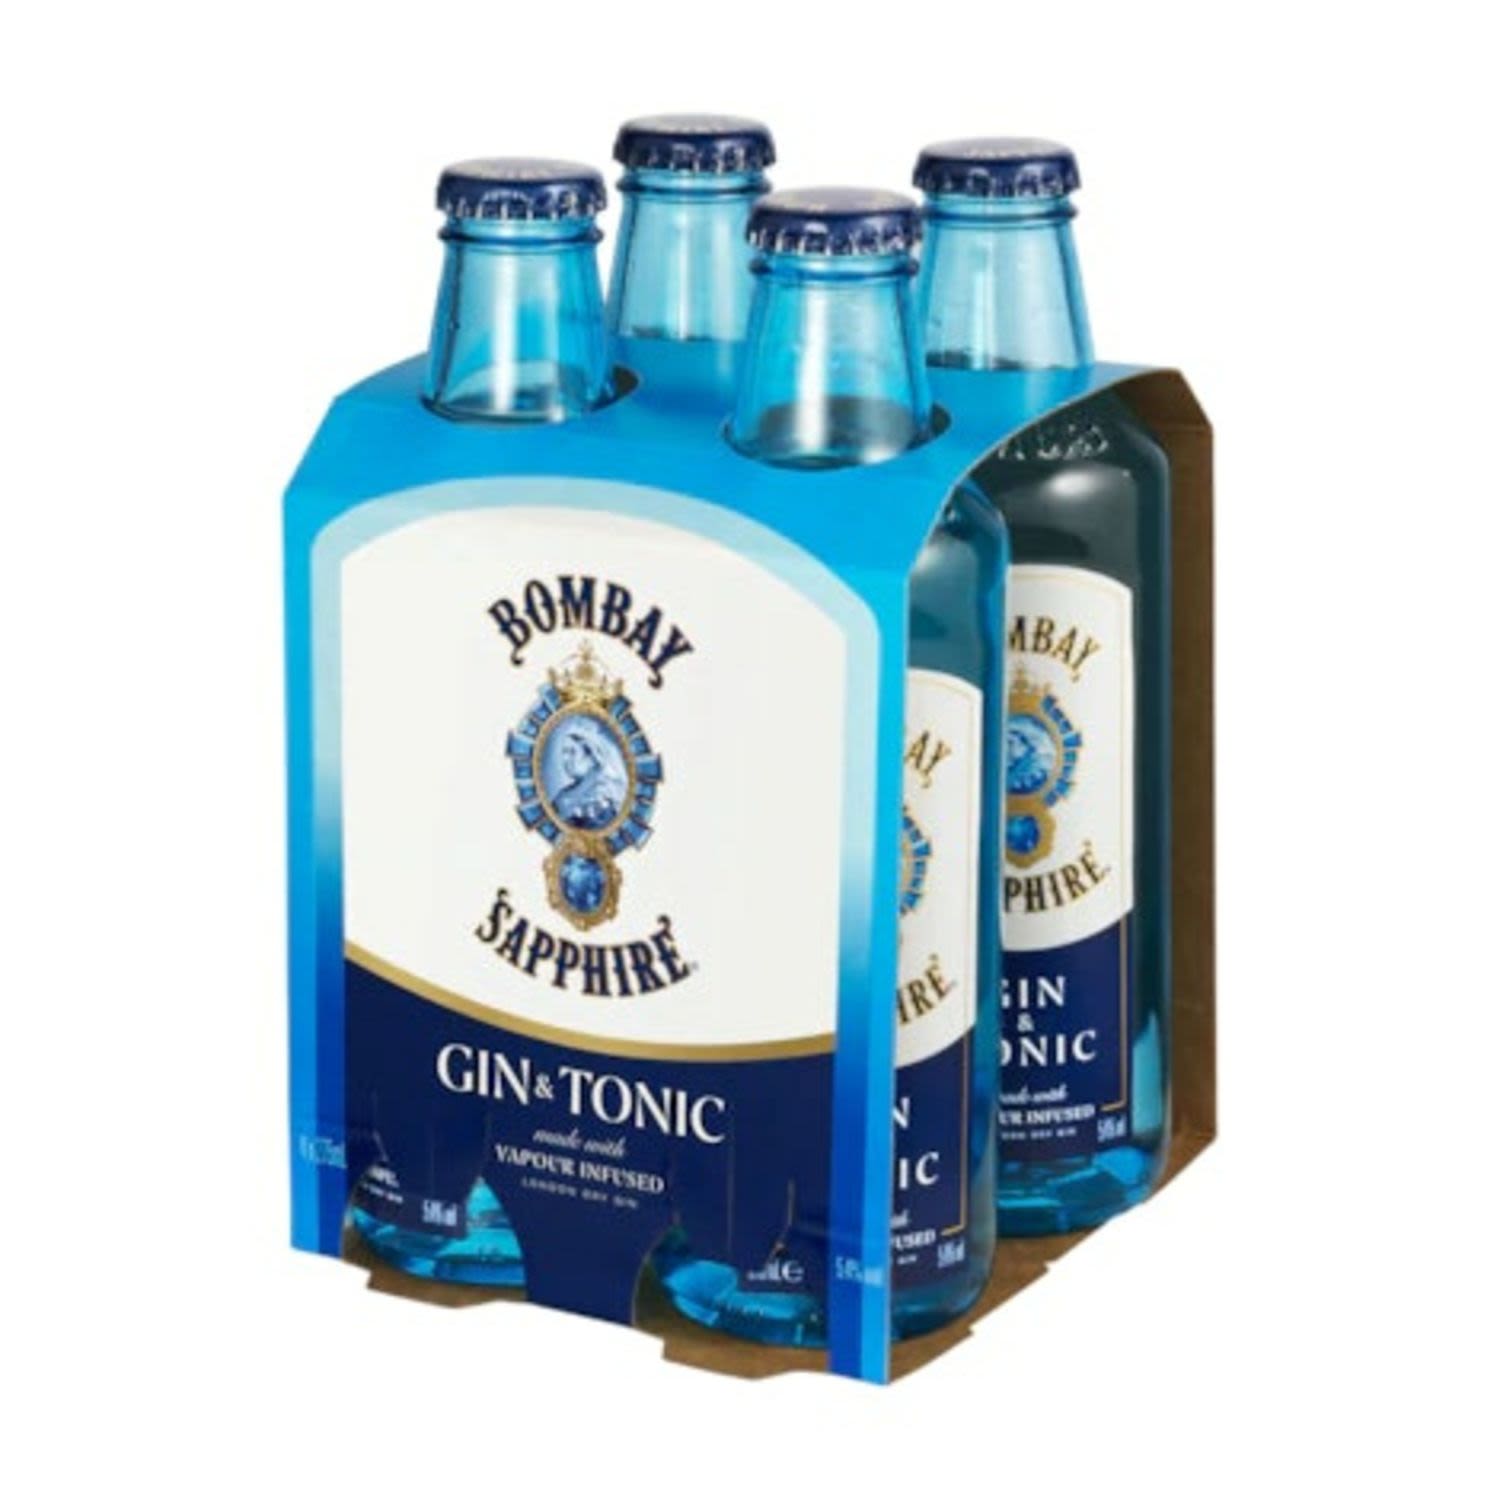 Bombay Sapphire Gin and Tonic Bottle 275mL 4 Pack<br /> <br />Alcohol Volume: 5.40%<br /><br />Pack Format: 4 Pack<br /><br />Standard Drinks: 1.2<br /><br />Pack Type: Bottle<br />